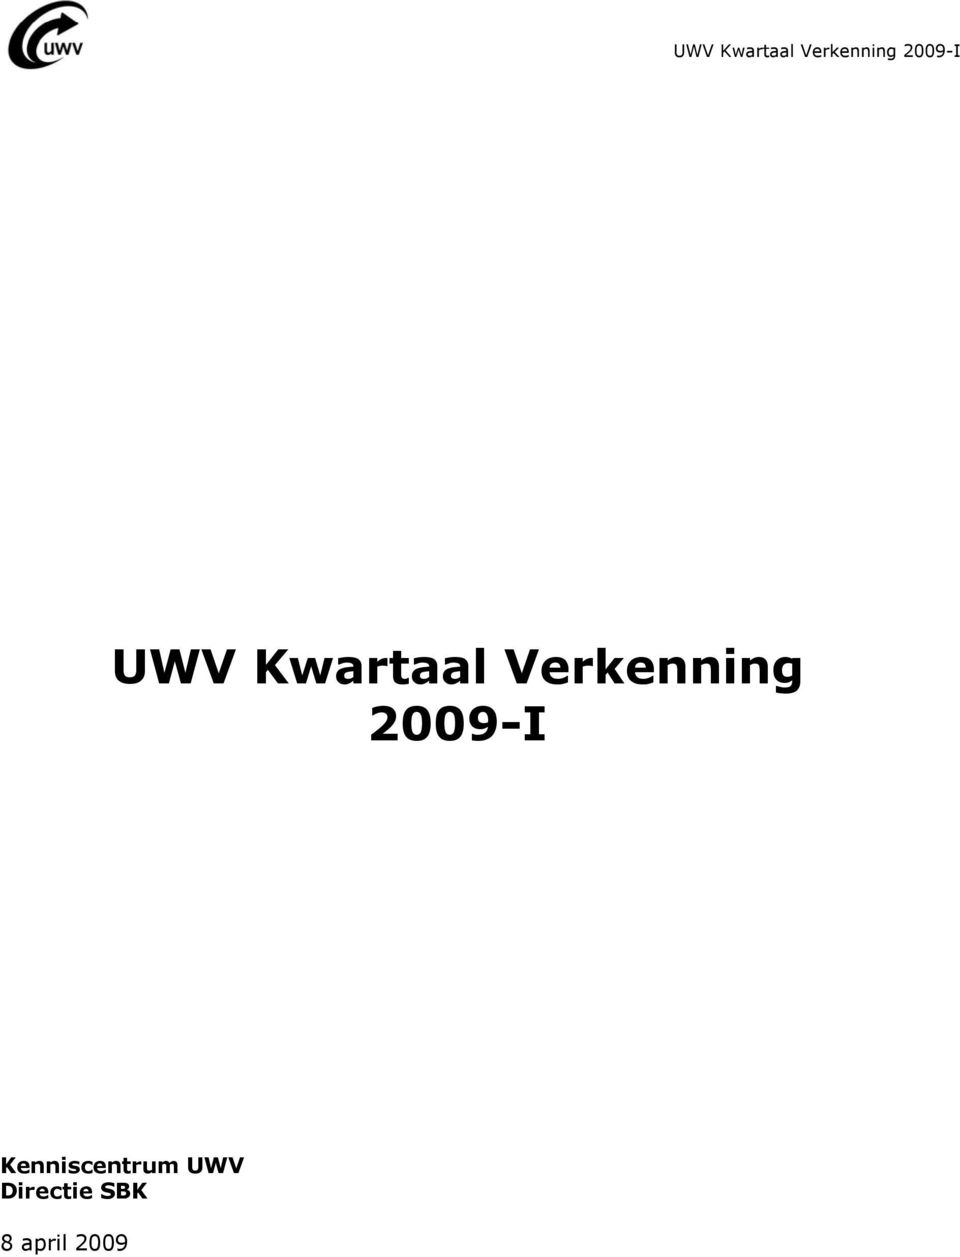 Kenniscentrum UWV